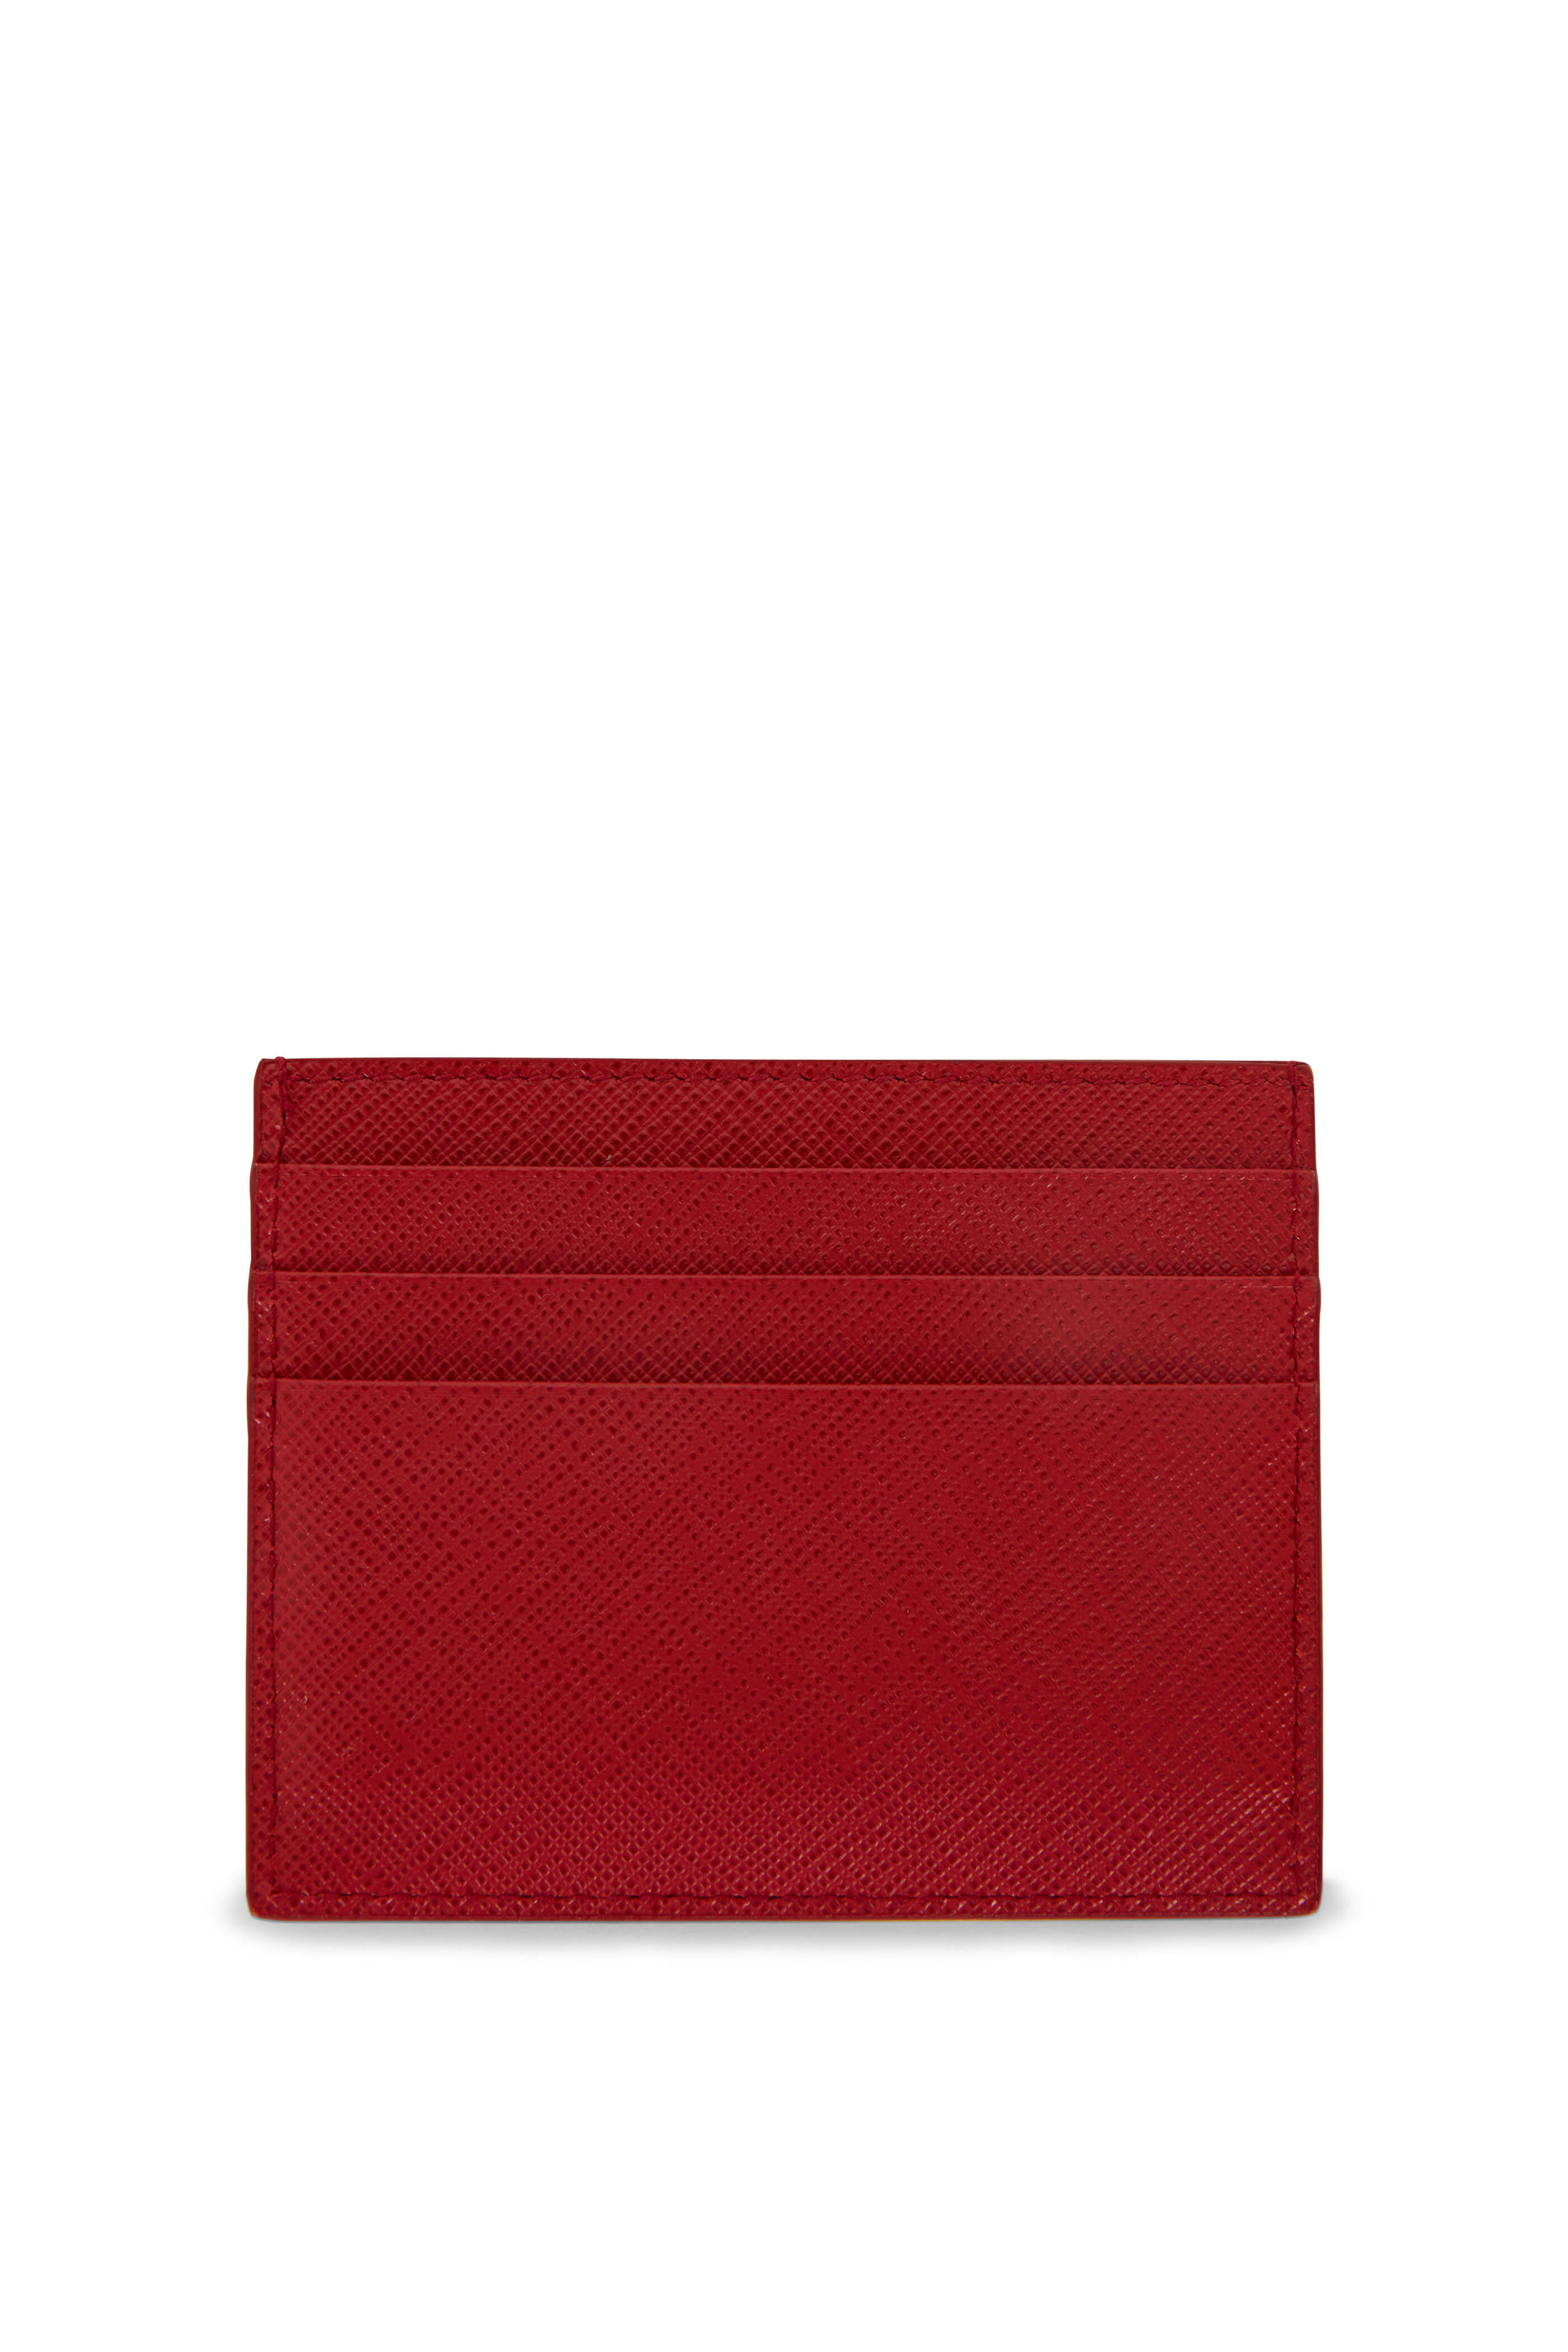 Prada, Accessories, Prada Saffiano Mc122 Leather Business Card Case Red  Color